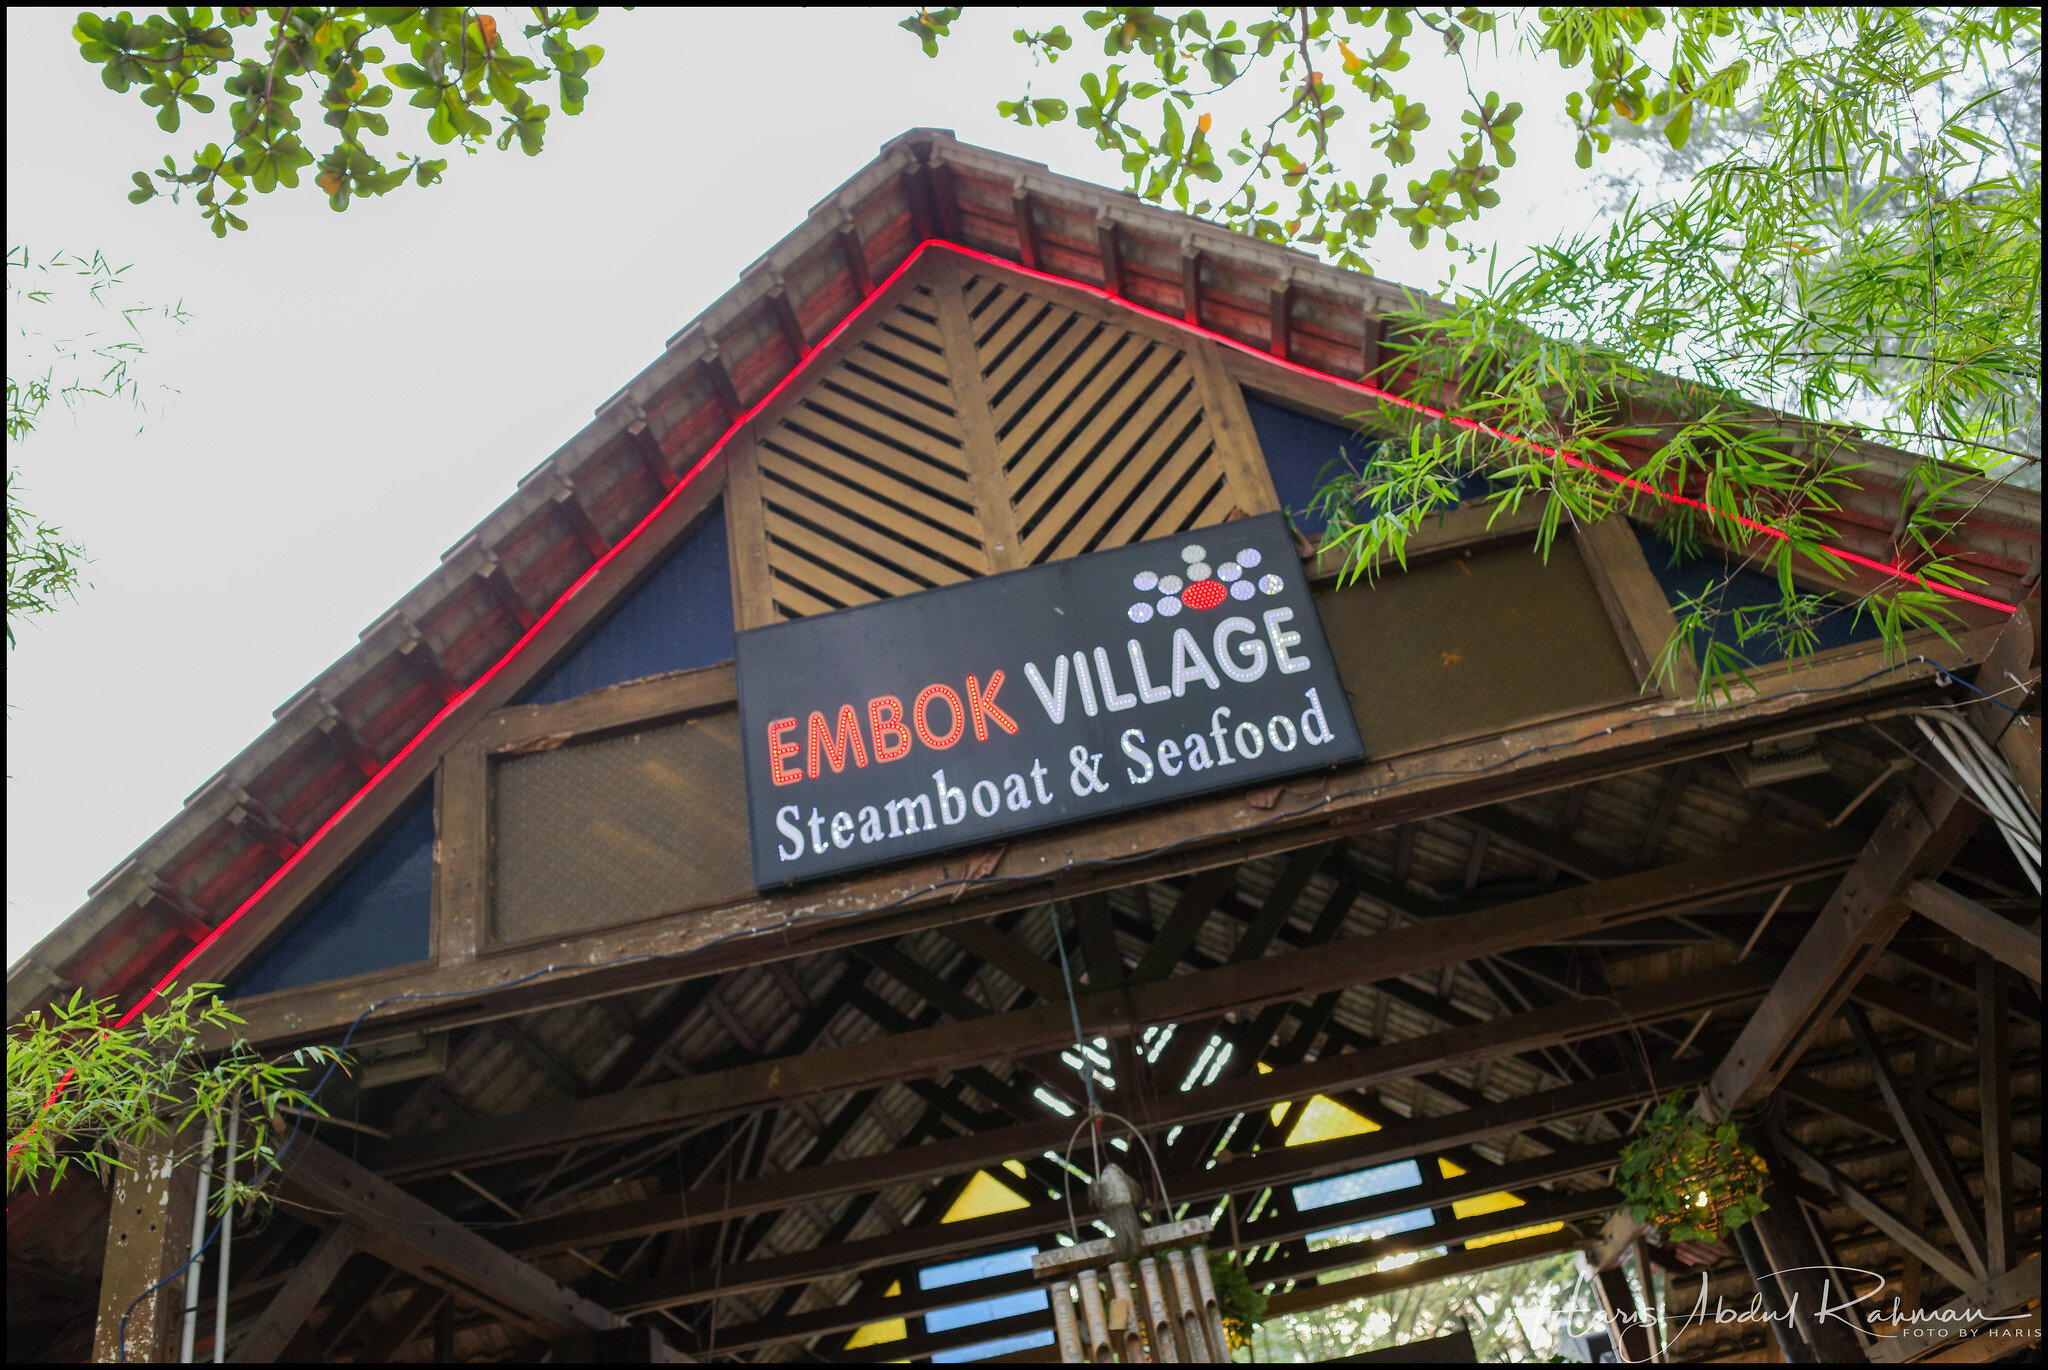 Embok village steamboat & seafood